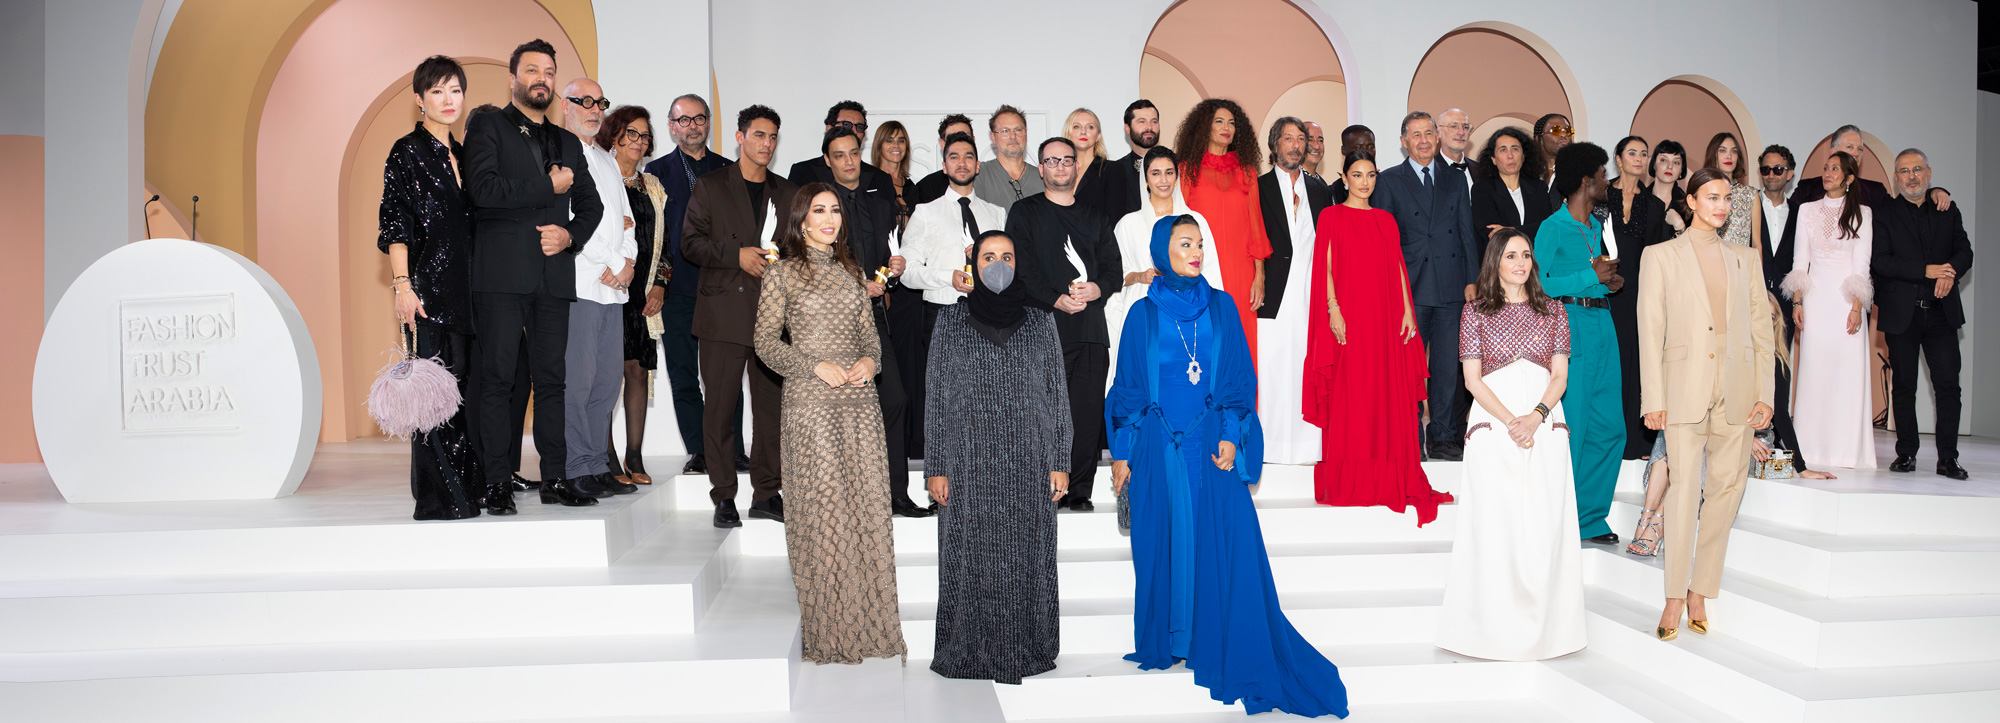 Fashion Trust Arabia يكرم ستة من المصممين العرب